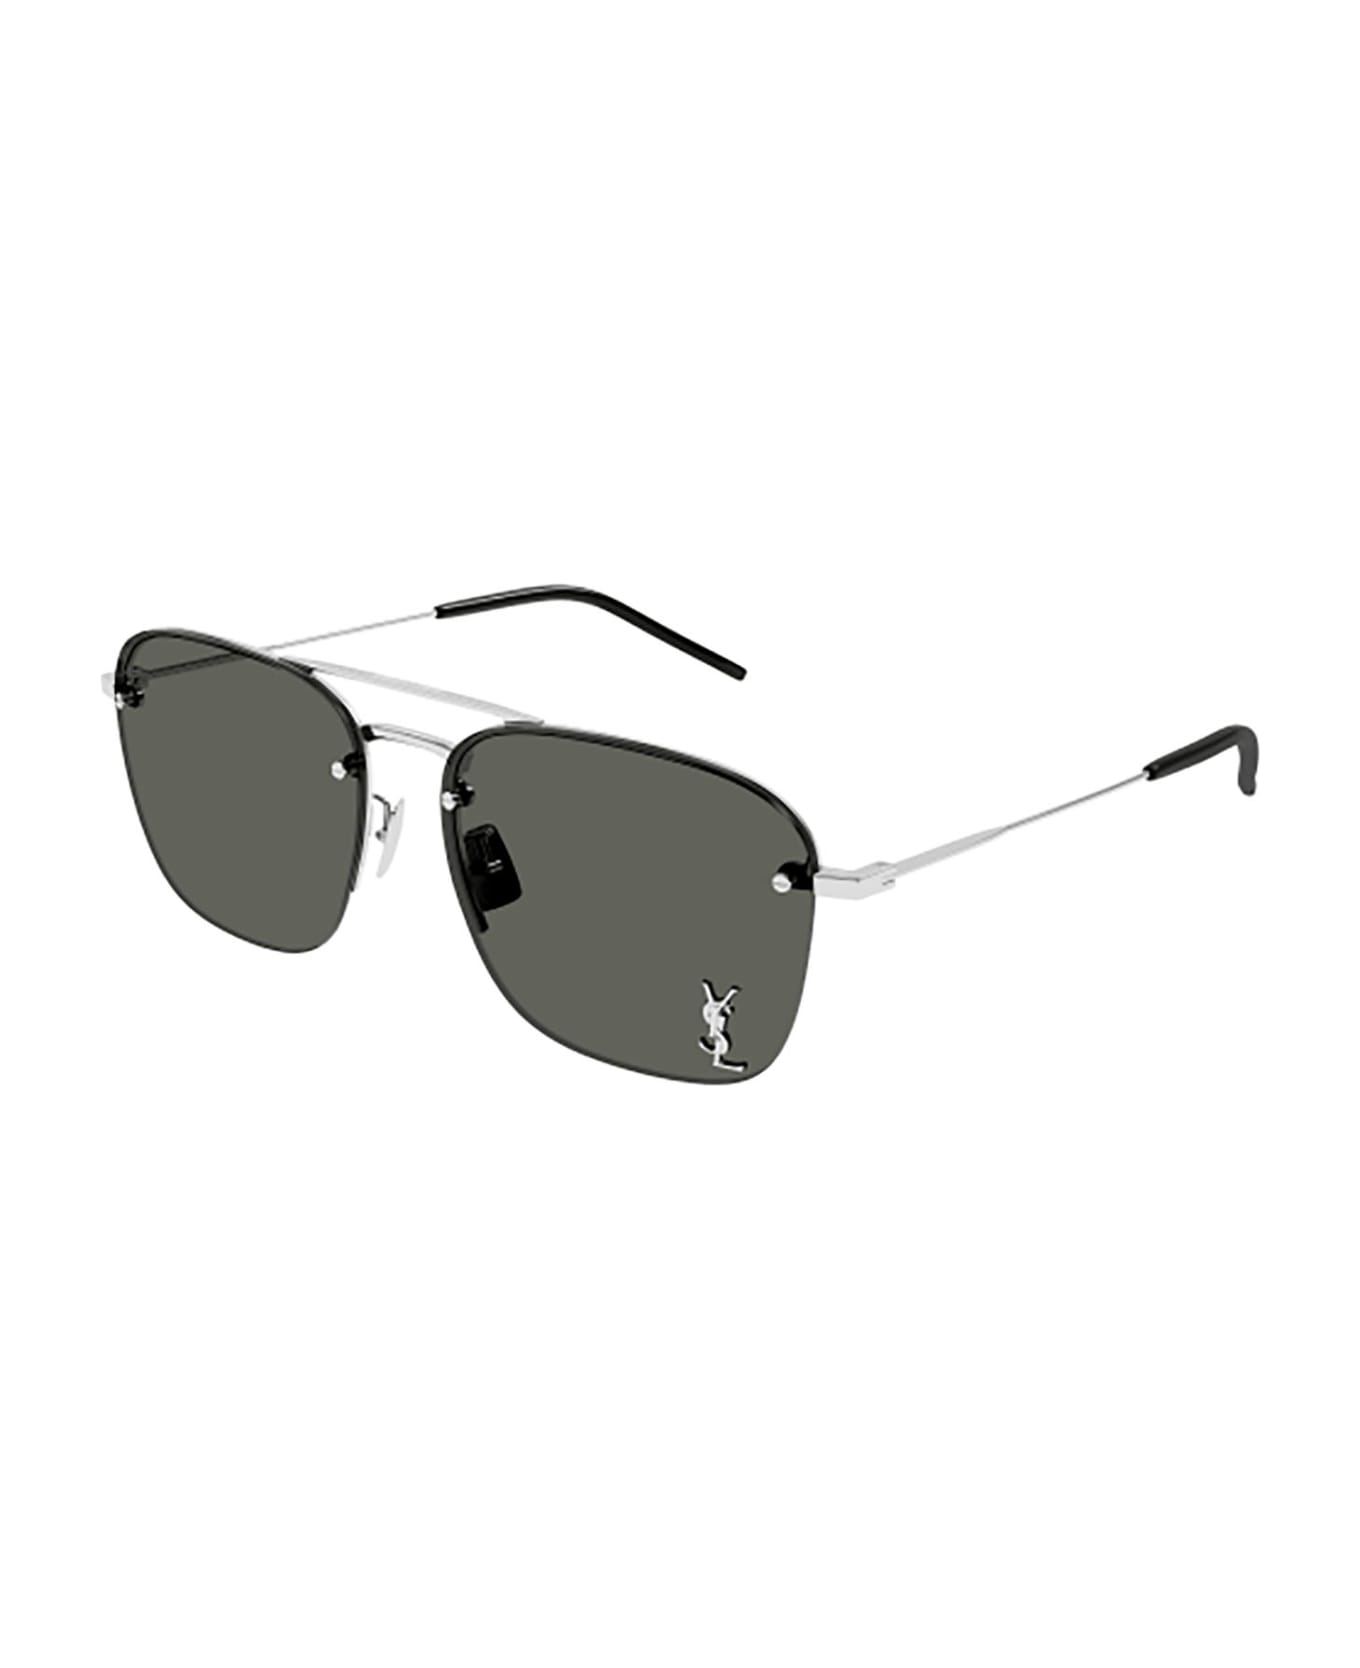 Saint Laurent Eyewear SL 309 M Sunglasses - Silver Silver Grey